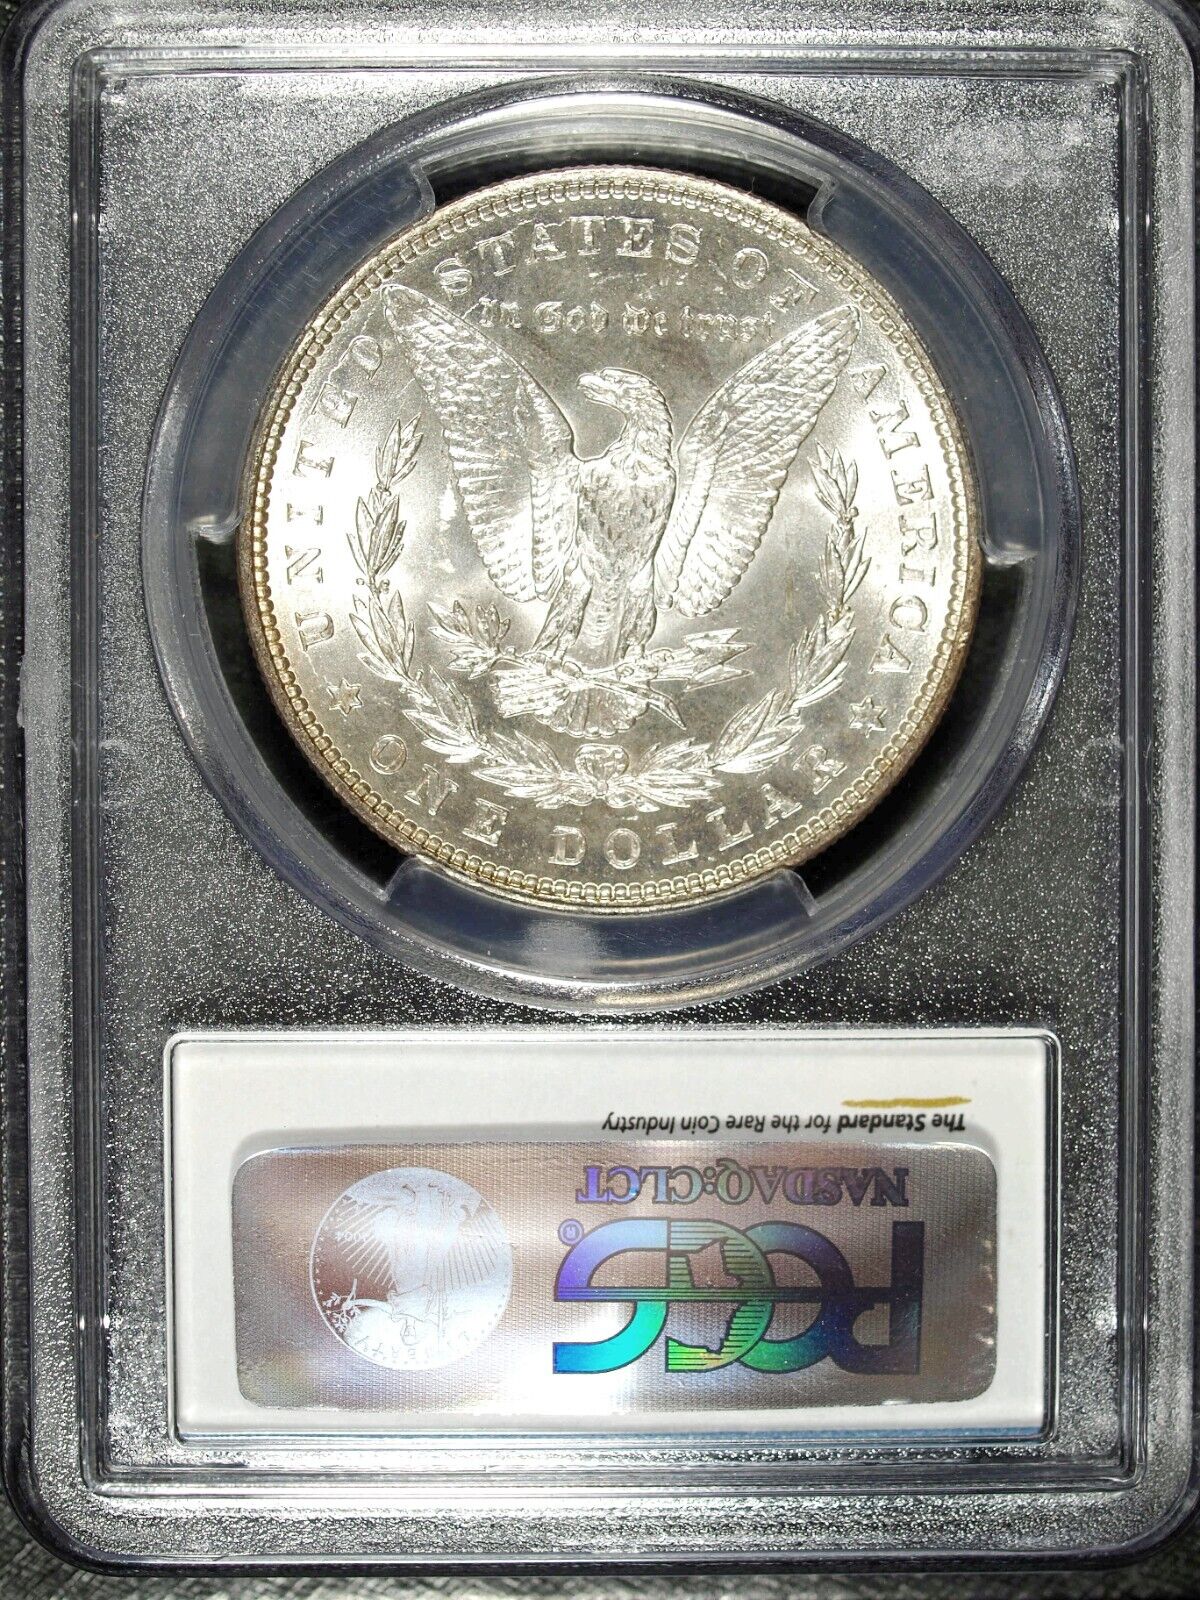 1887 P NGC MS 64 Morgan Silver Dollar ☆☆ Great Collectible ☆☆ 588